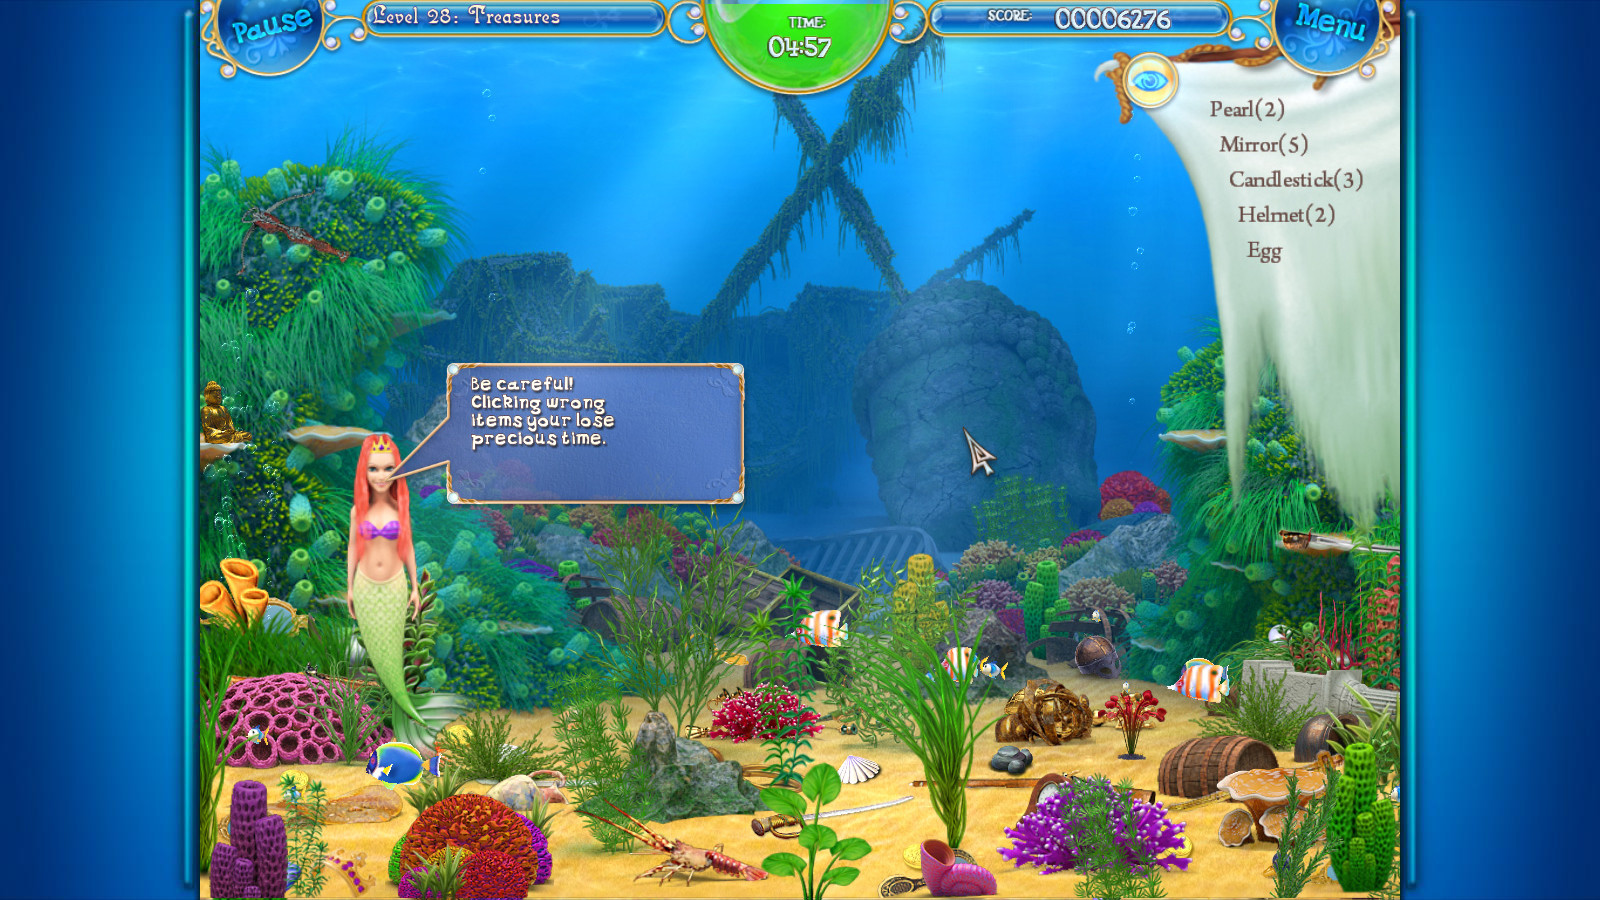 [$ 0.33] Mermaid Adventures: The Magic Pearl Steam CD Key